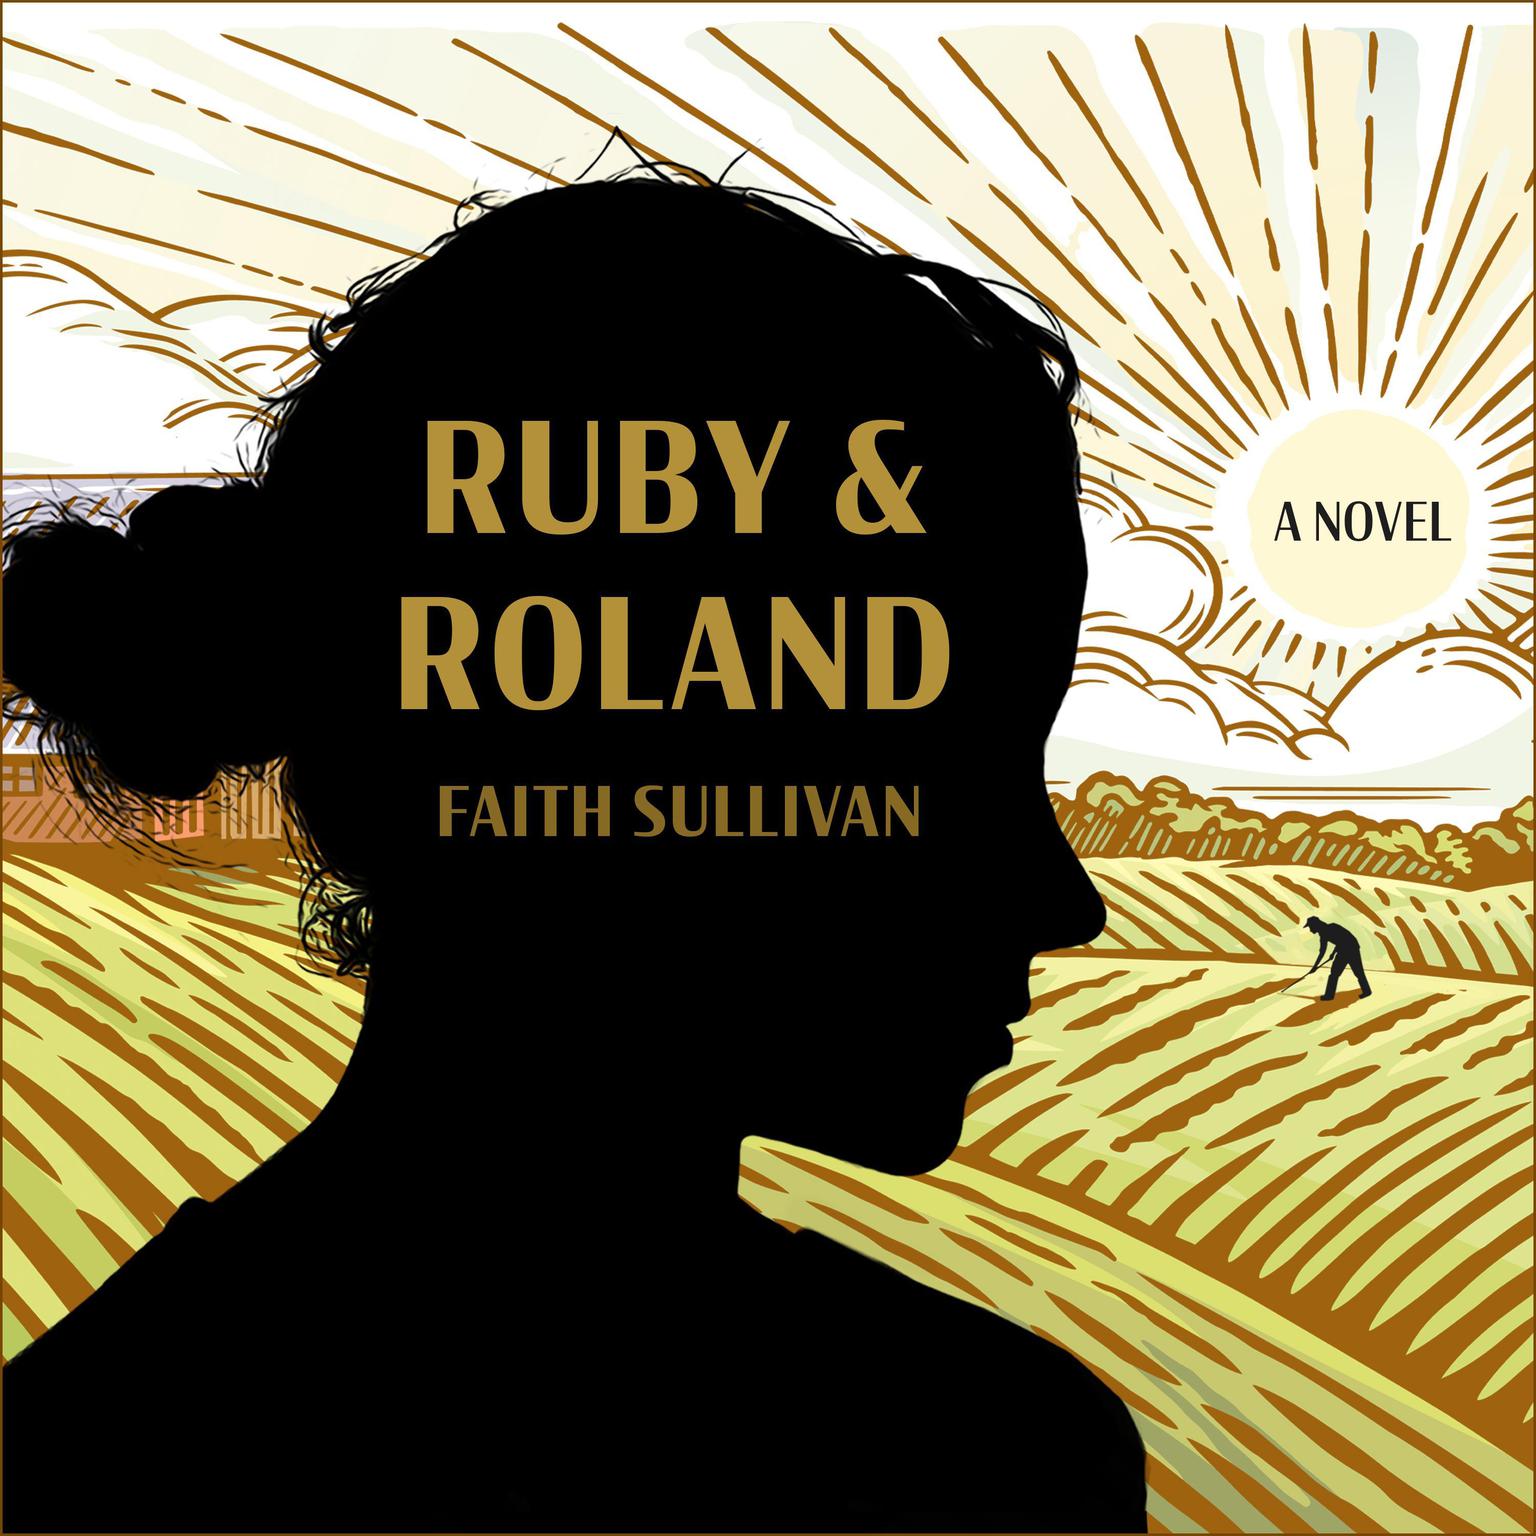 Ruby and Roland Audiobook, by Faith Sullivan